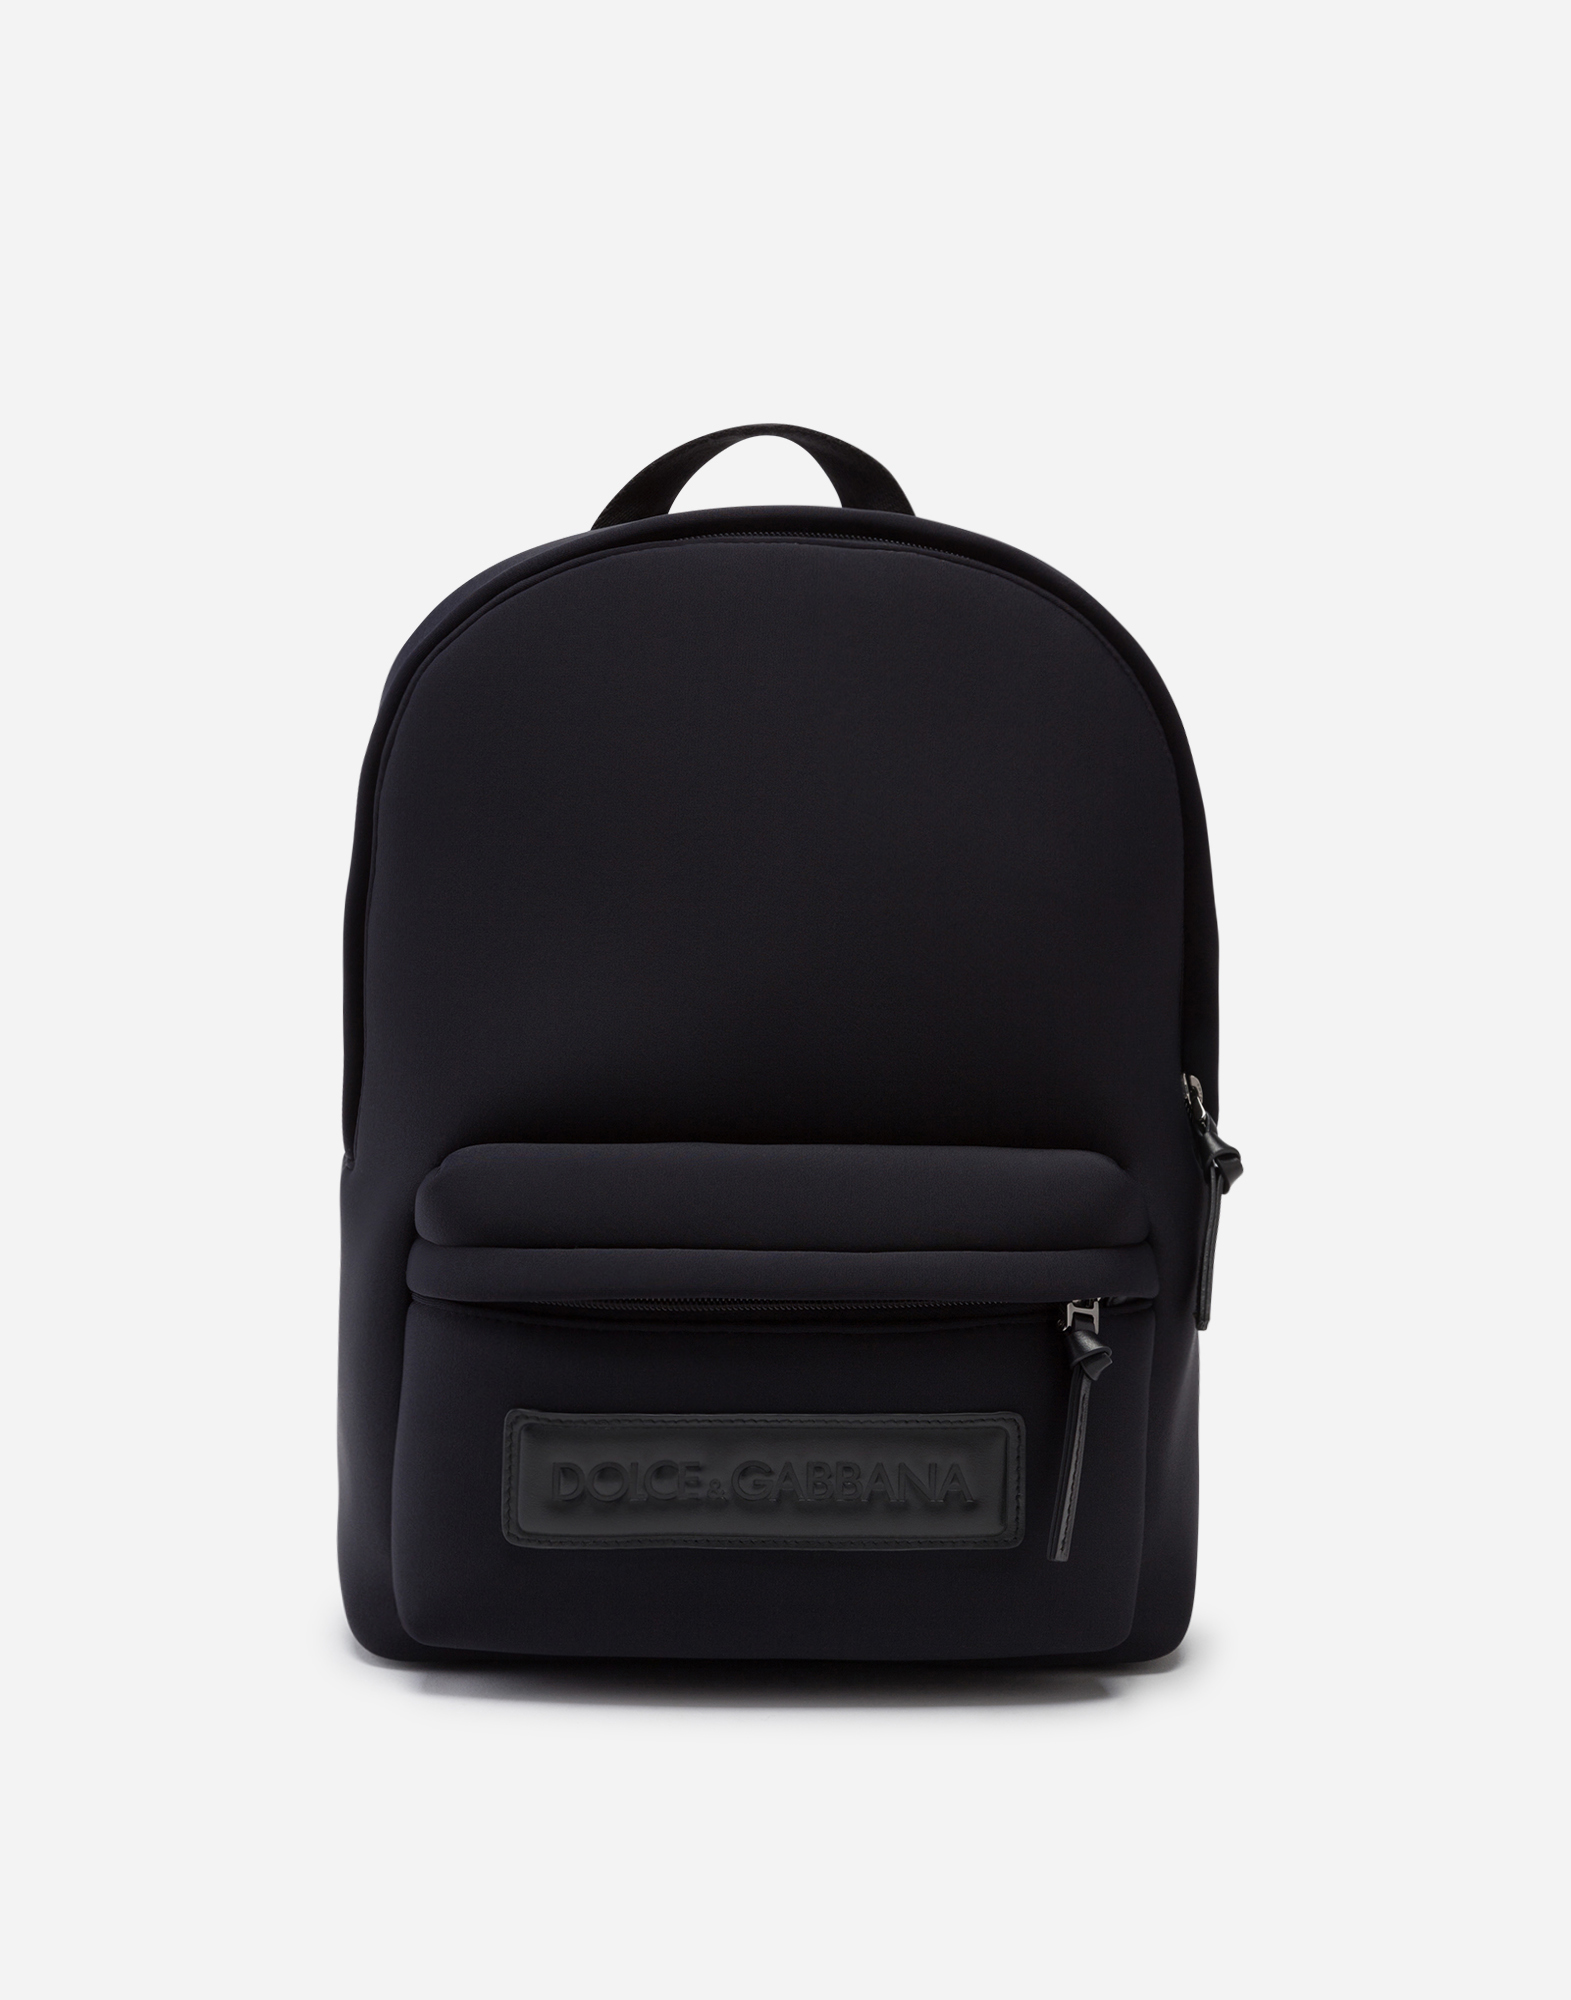 Dolce & Gabbana Neoprene Backpack With Logo